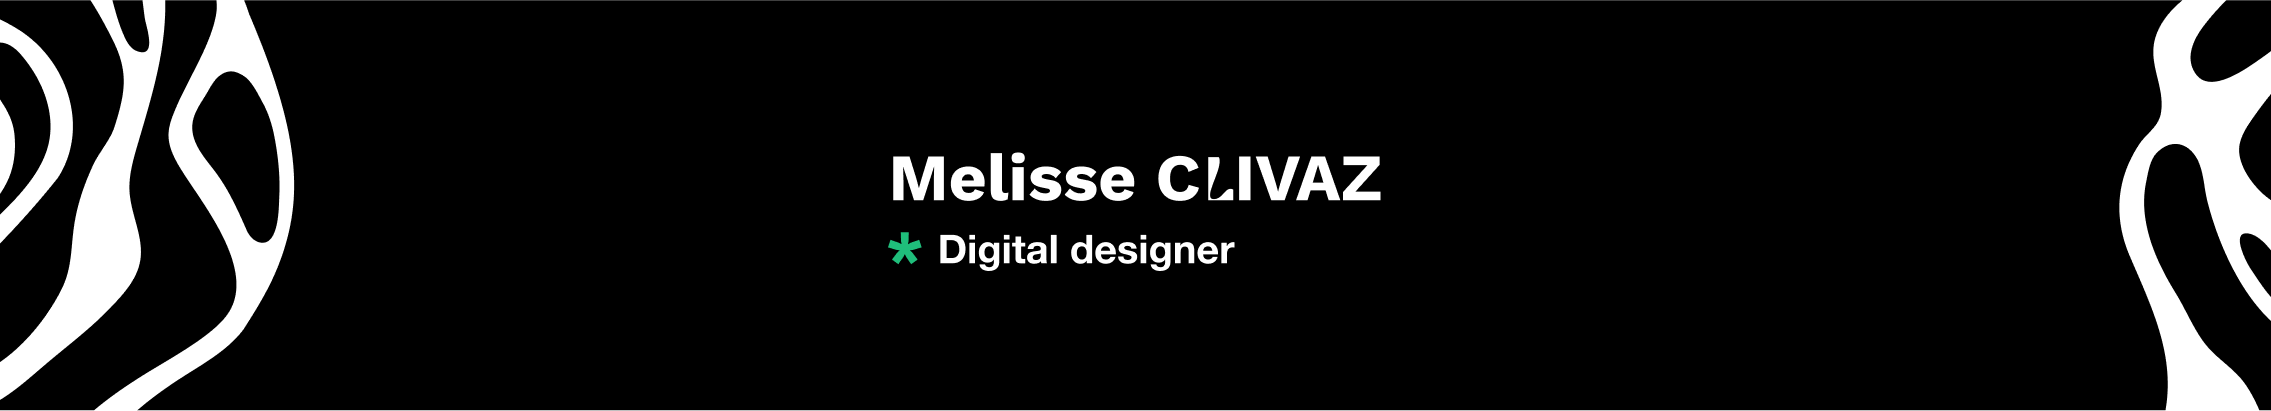 Melisse Clivaz's profile banner